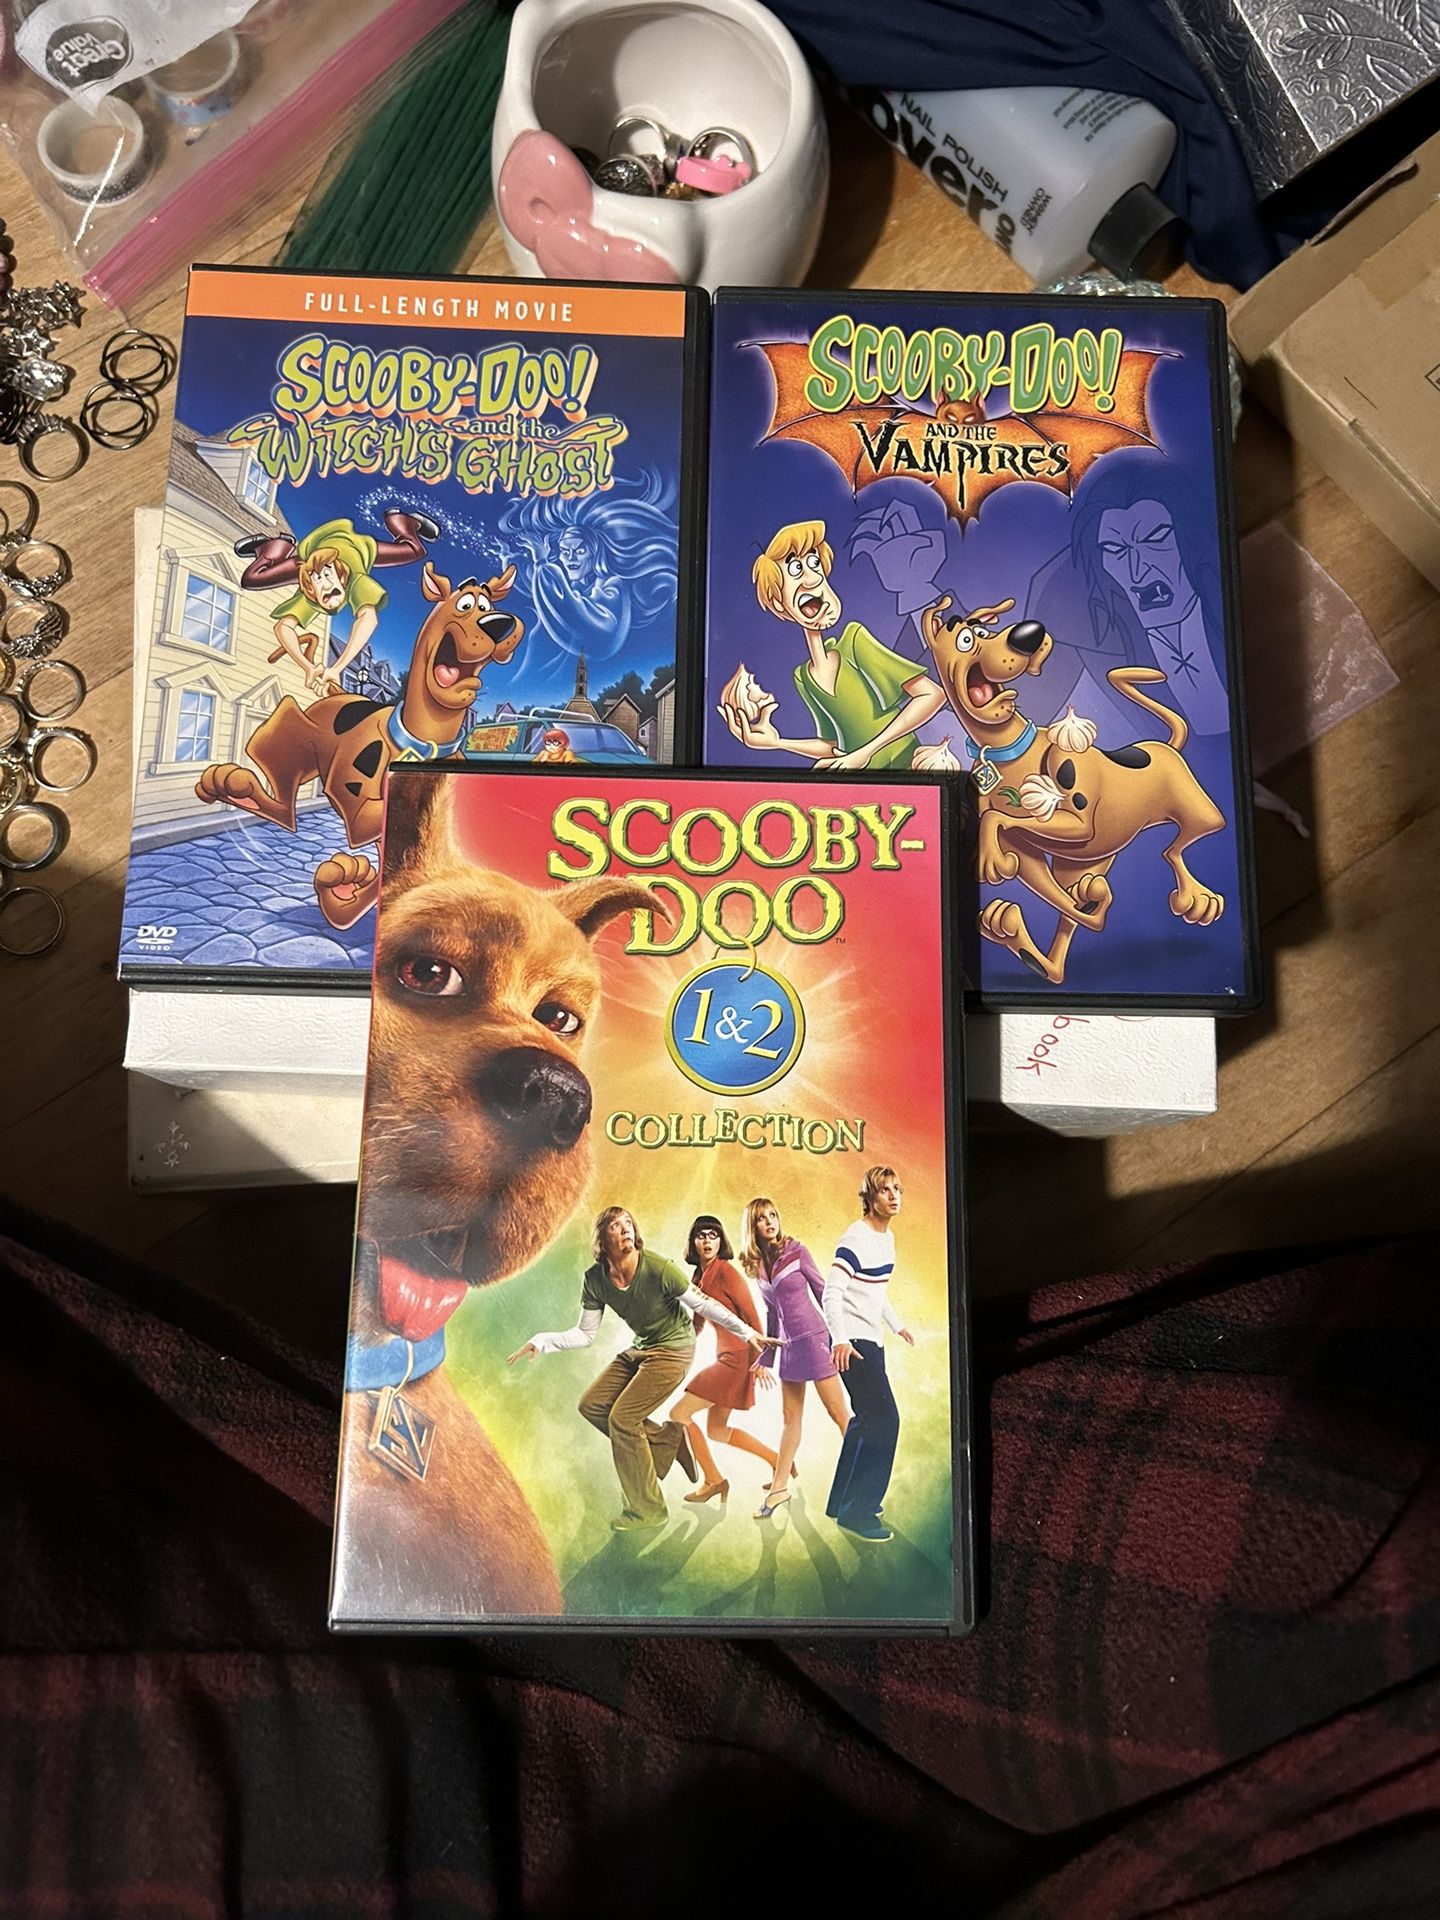 3 Pack Of Scooby Doo DVDs